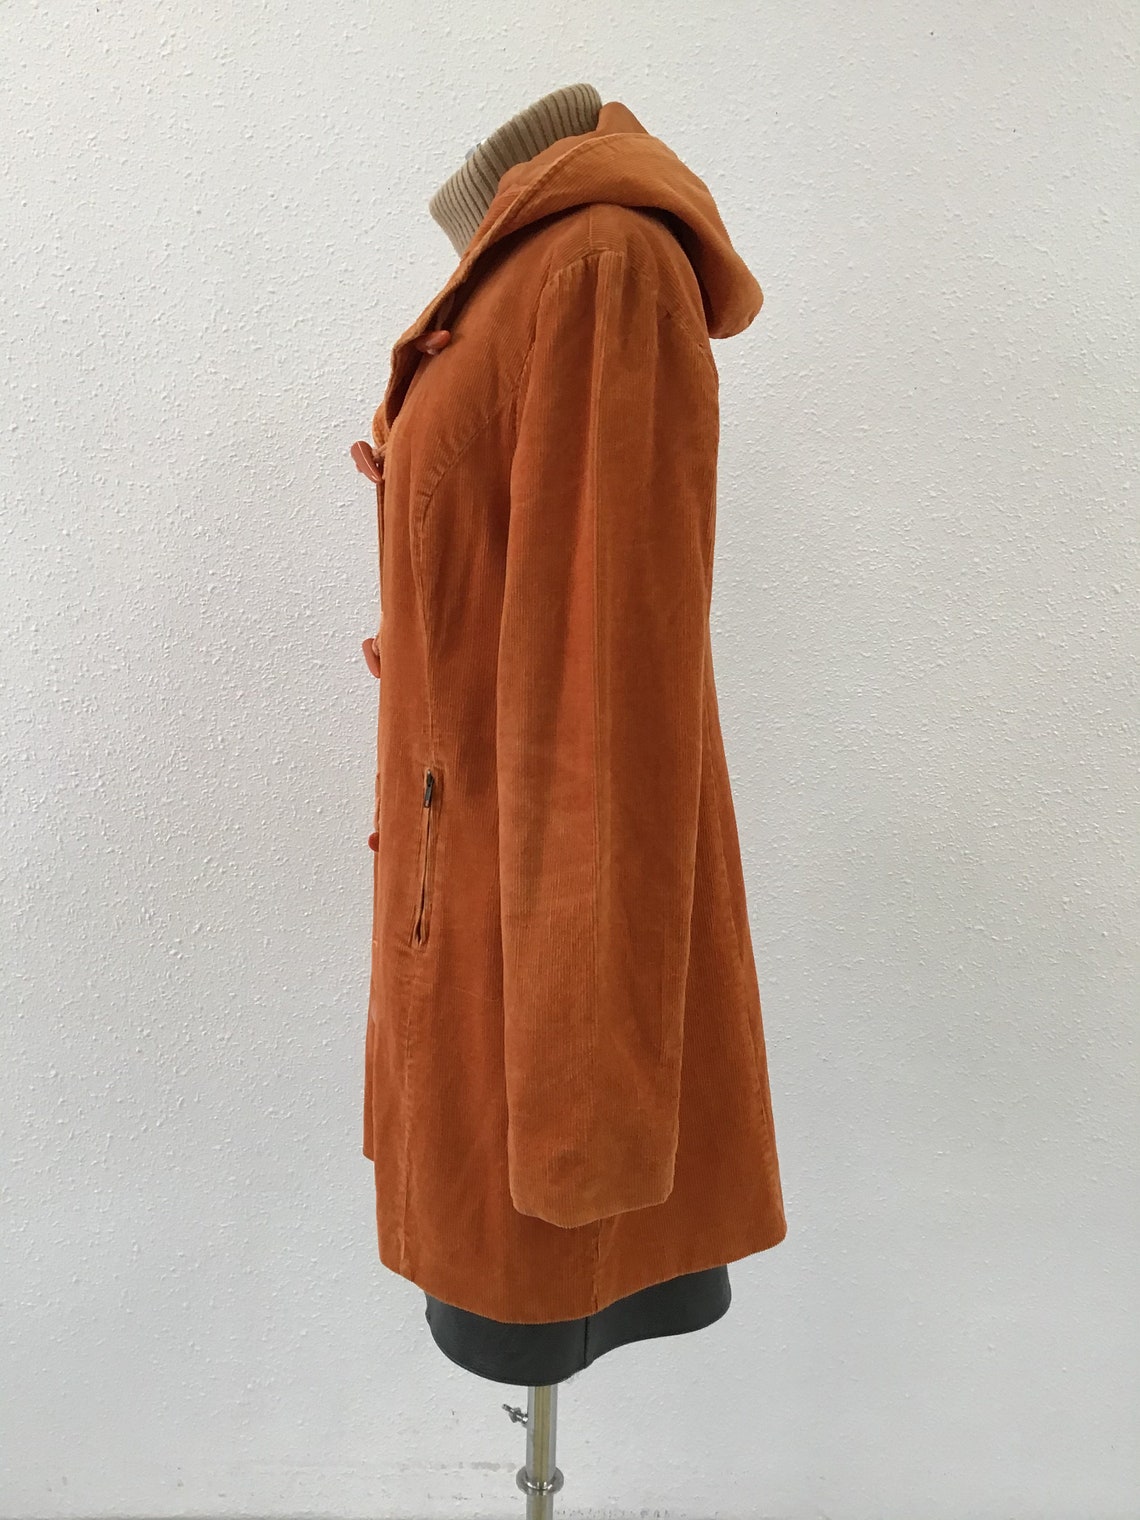 Vintage corduray orange trench coat Pumpkin jacket Parka | Etsy